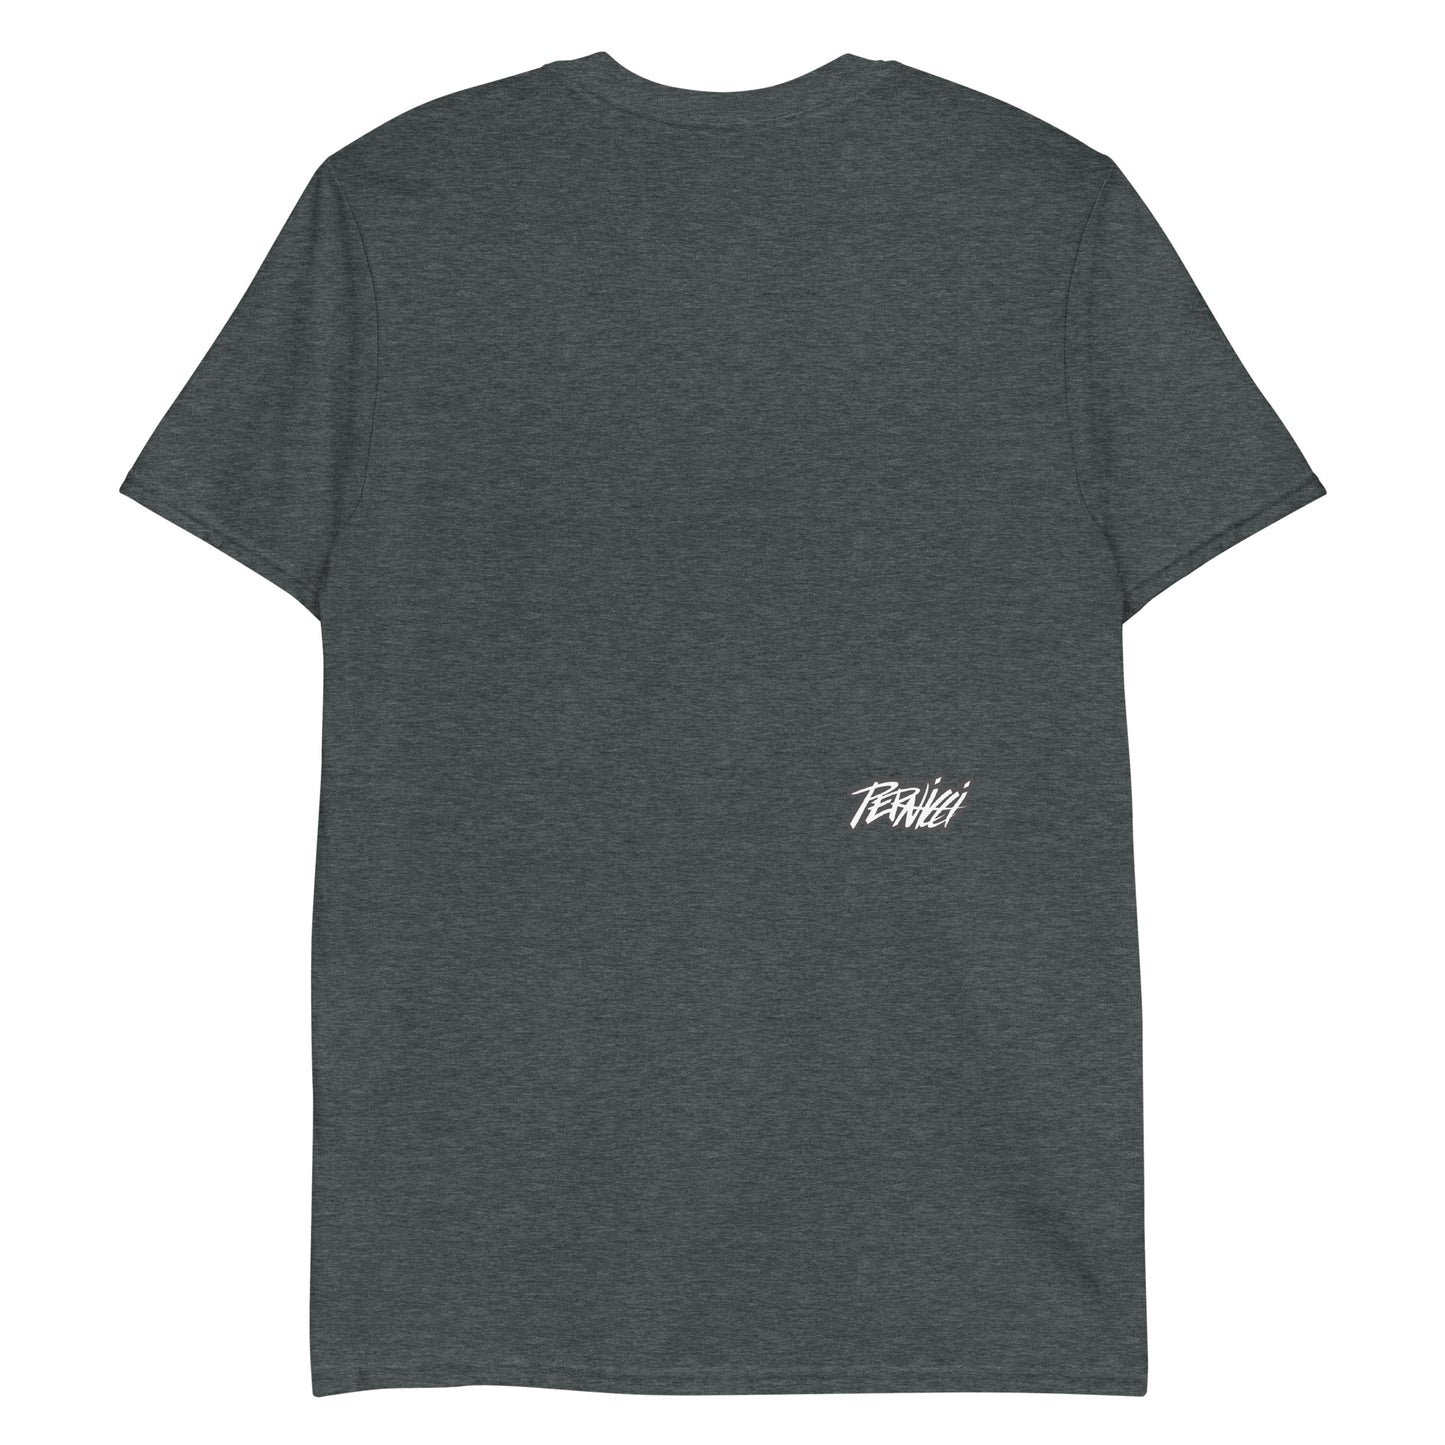 T-Shirt Sig Surf4